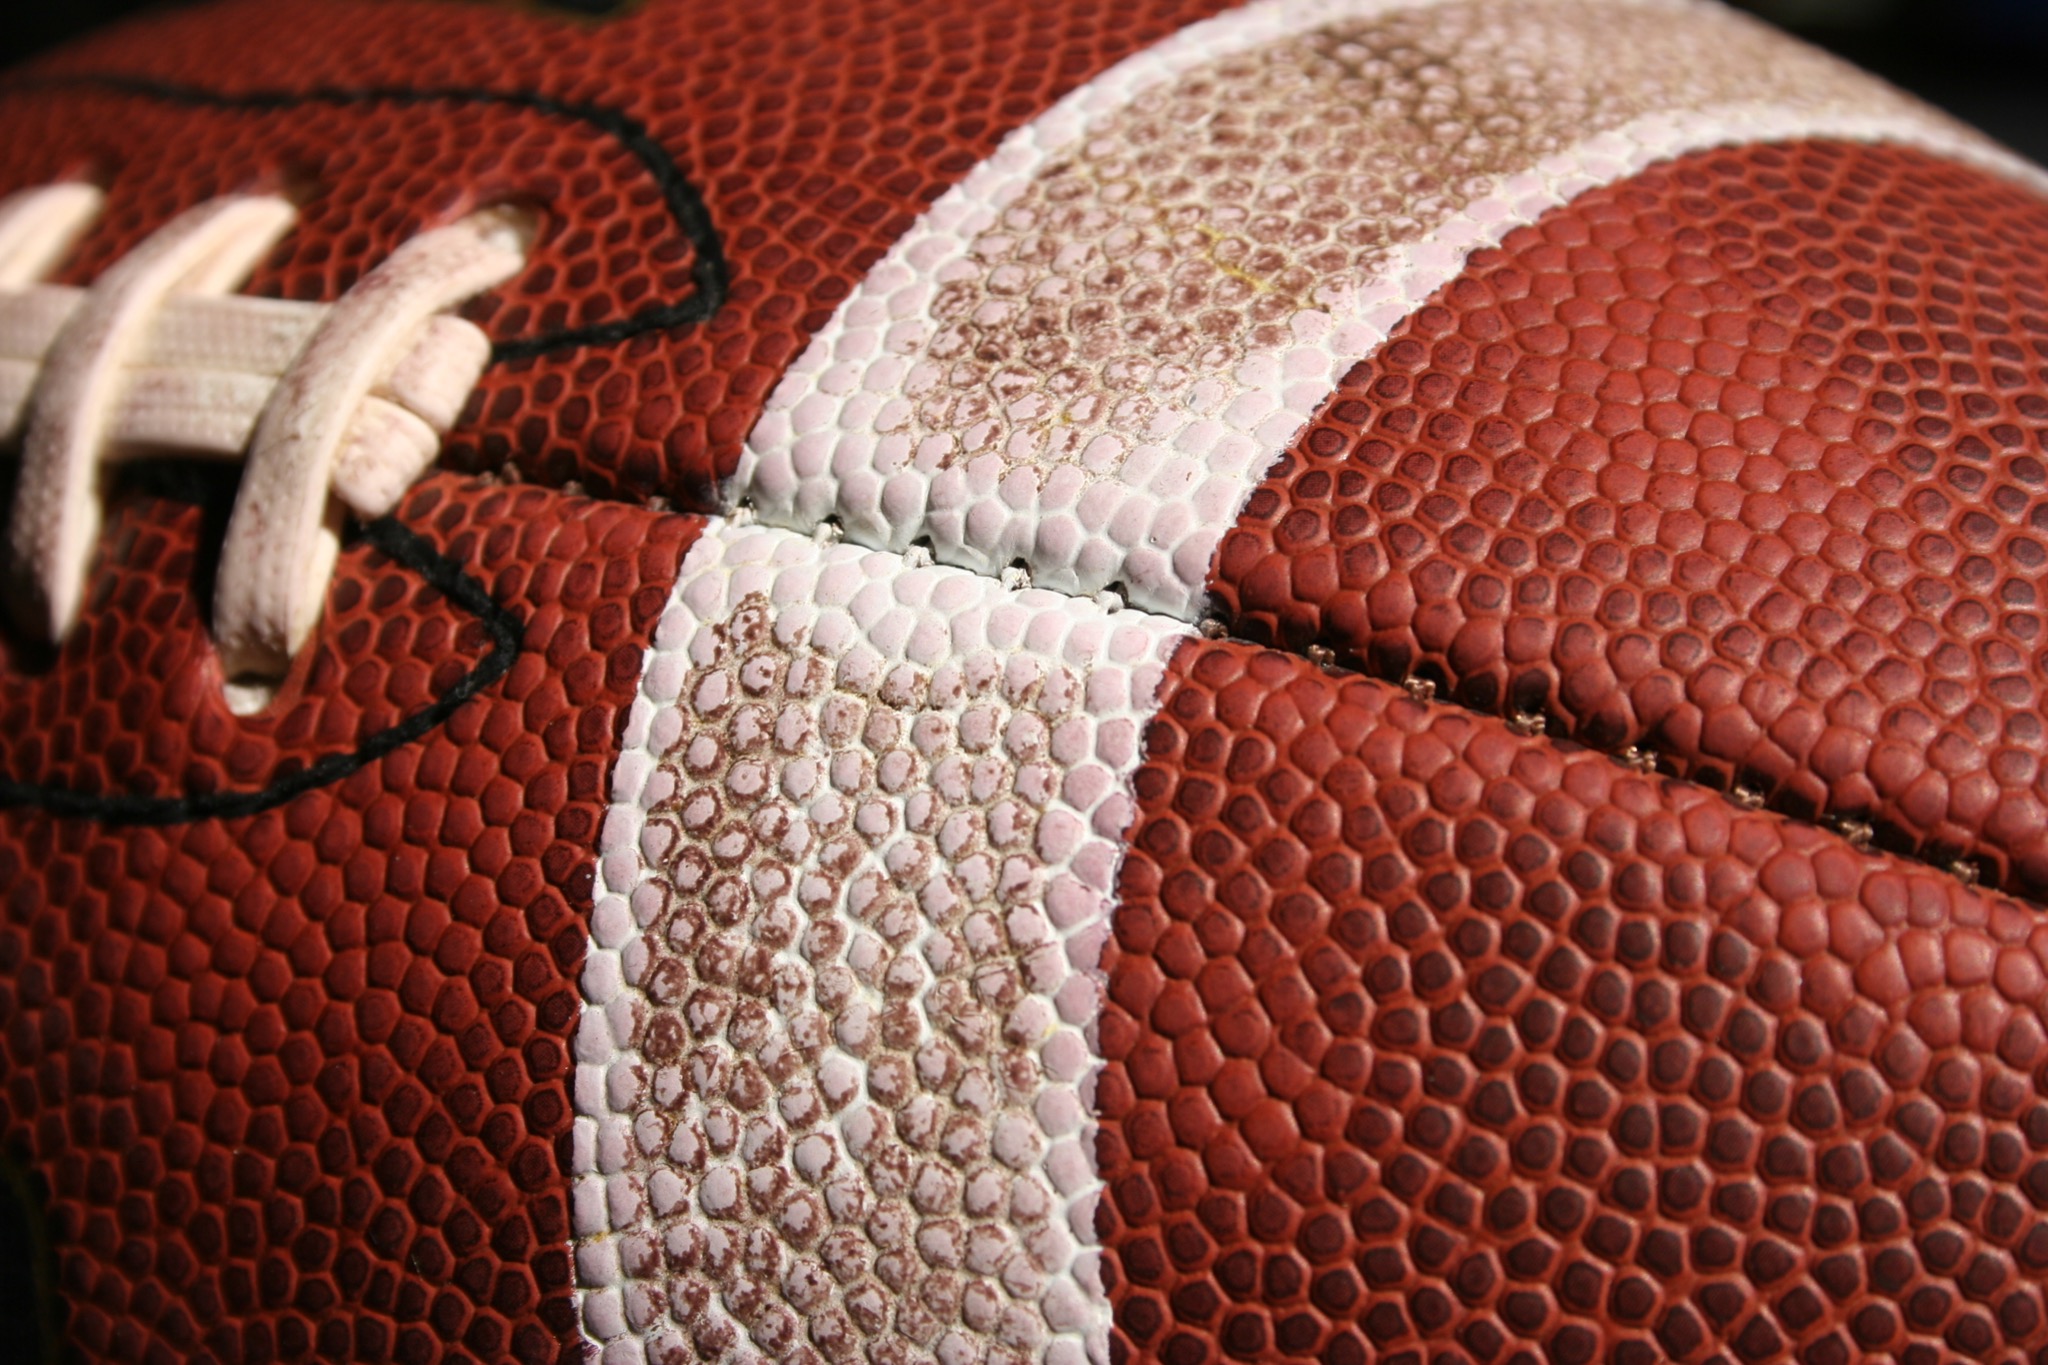 University Of Buffalo Football Program Resorts To Crowdfunding For New Equipment